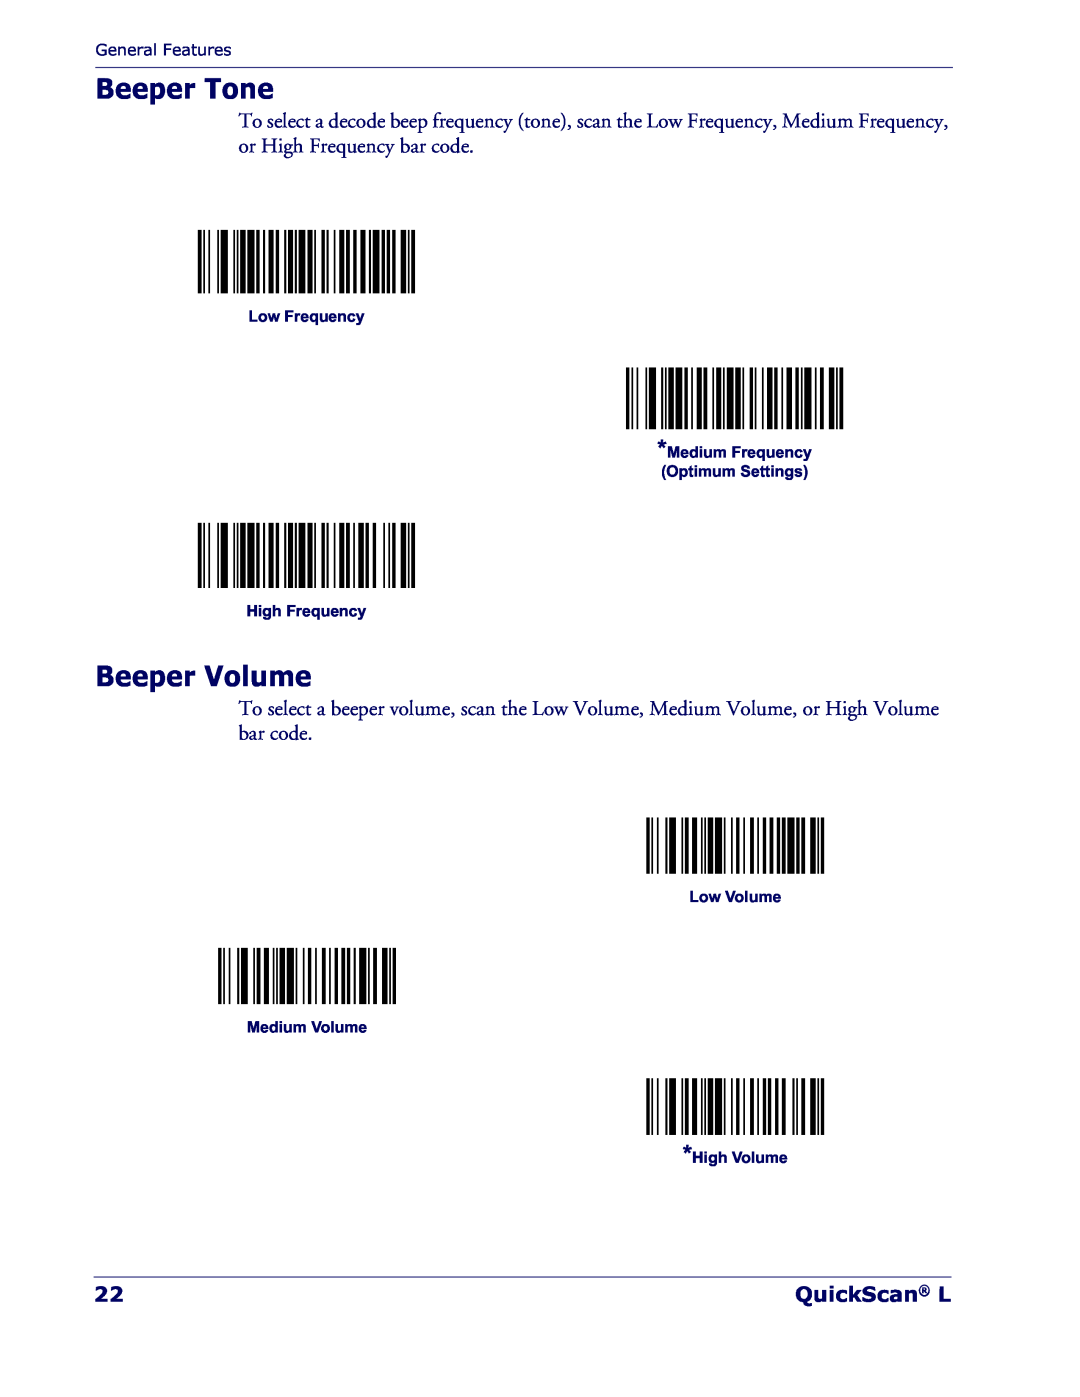 Datalogic Scanning QD 2300 manual Beeper Tone, Beeper Volume, QuickScan L, Low Volume Medium Volume High Volume 